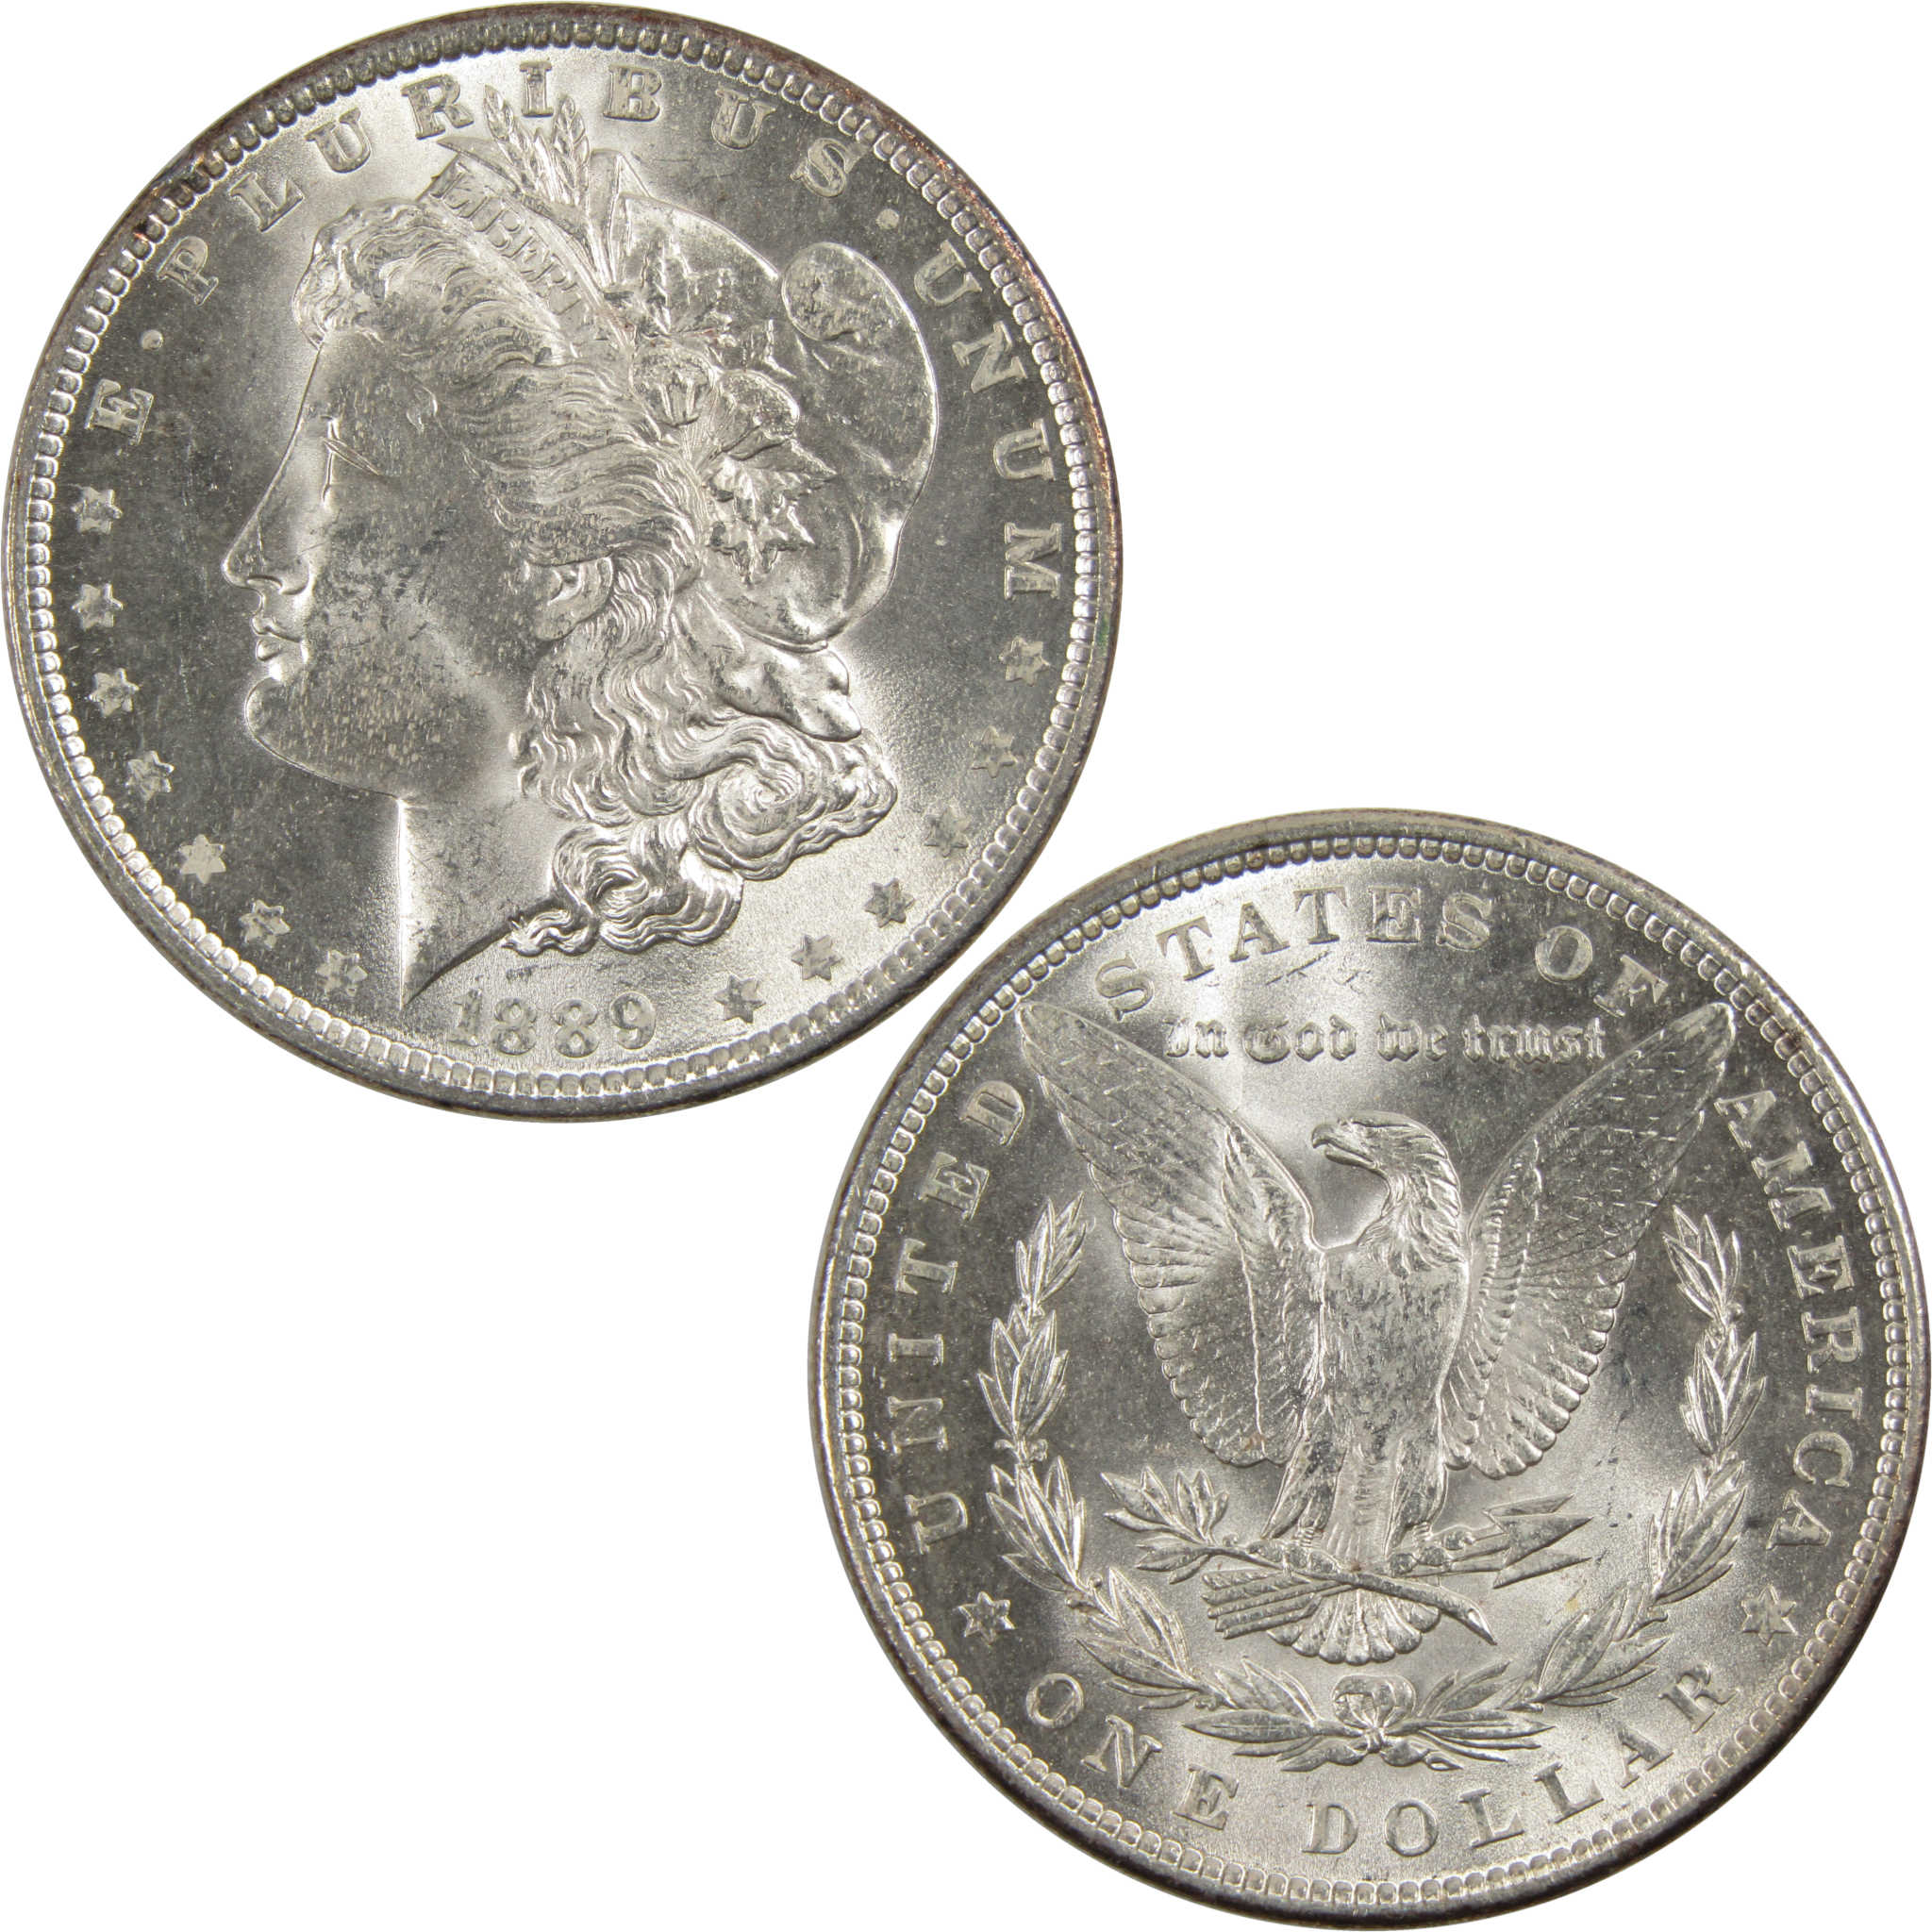 1889 Morgan Dollar BU Choice Uncirculated 90% Silver $1 Coin SKU:I8120 - Morgan coin - Morgan silver dollar - Morgan silver dollar for sale - Profile Coins &amp; Collectibles